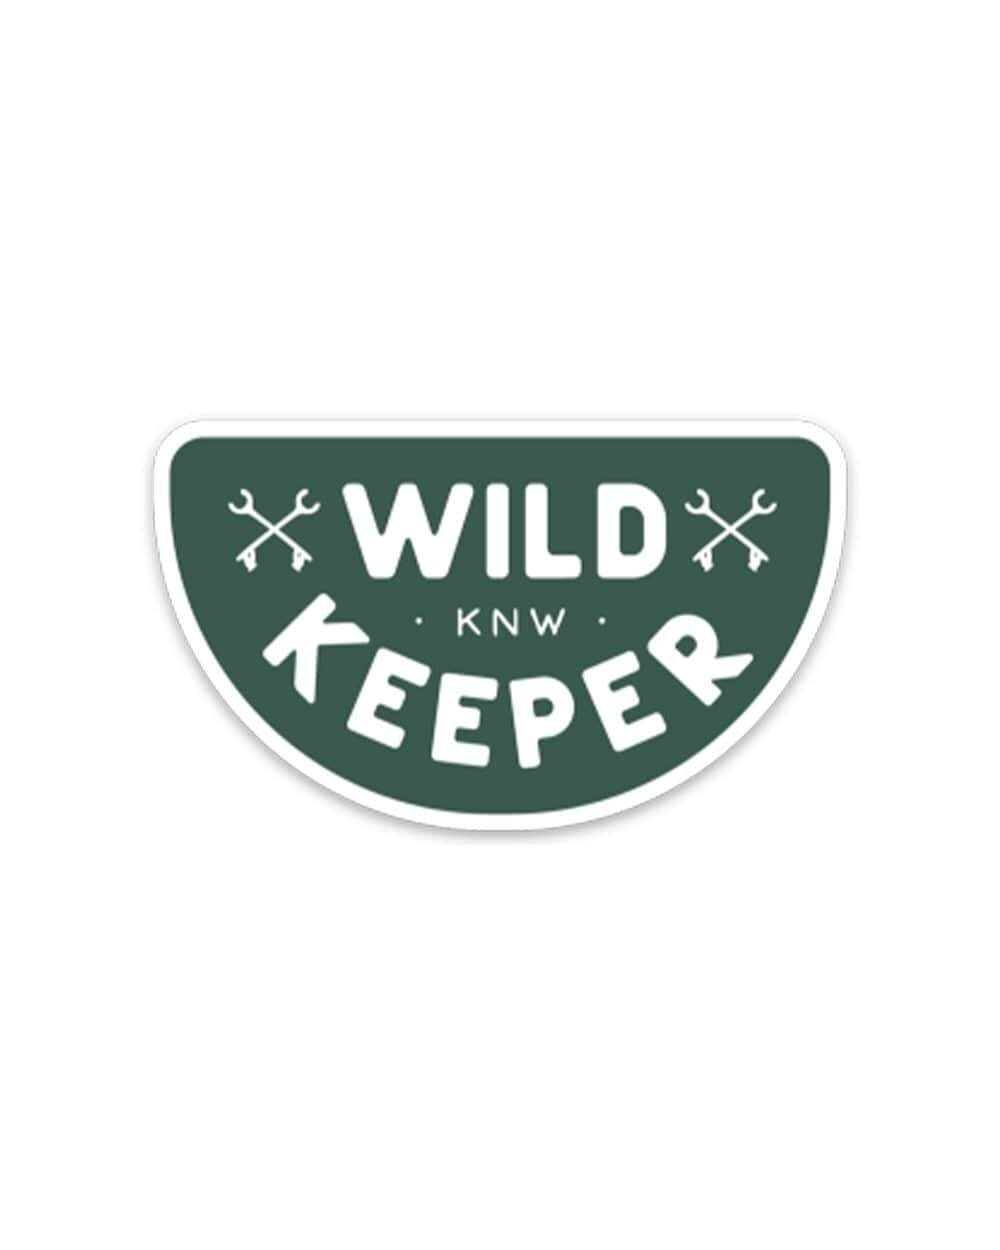 keep-nature-wild-wild-keeper Logo 2020.jpg